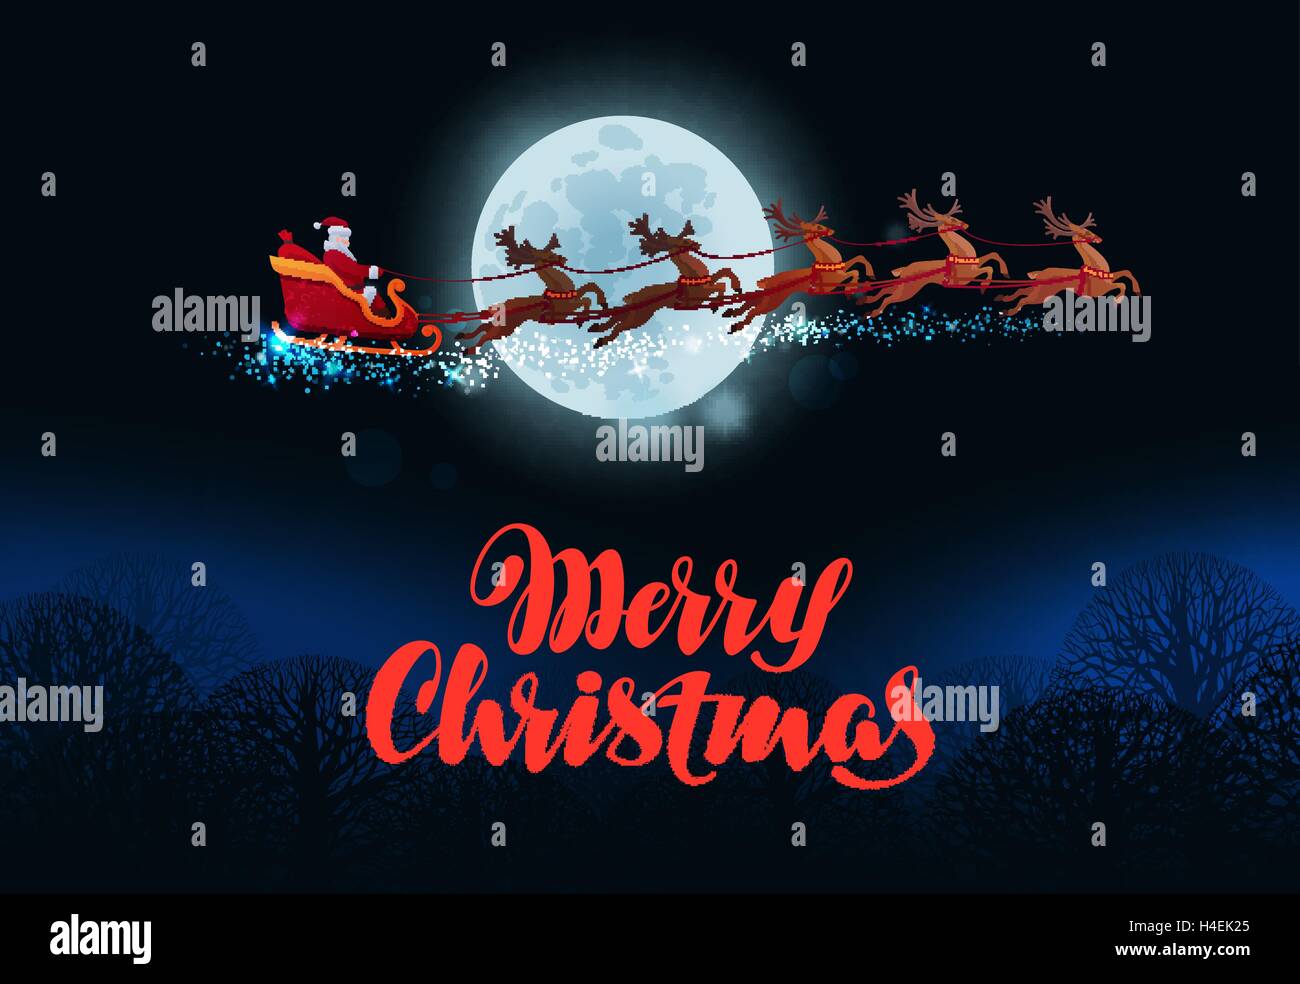 Merry Christmas greeting card. Santa Claus flies in sleigh pulled by reindeer Stock Vector